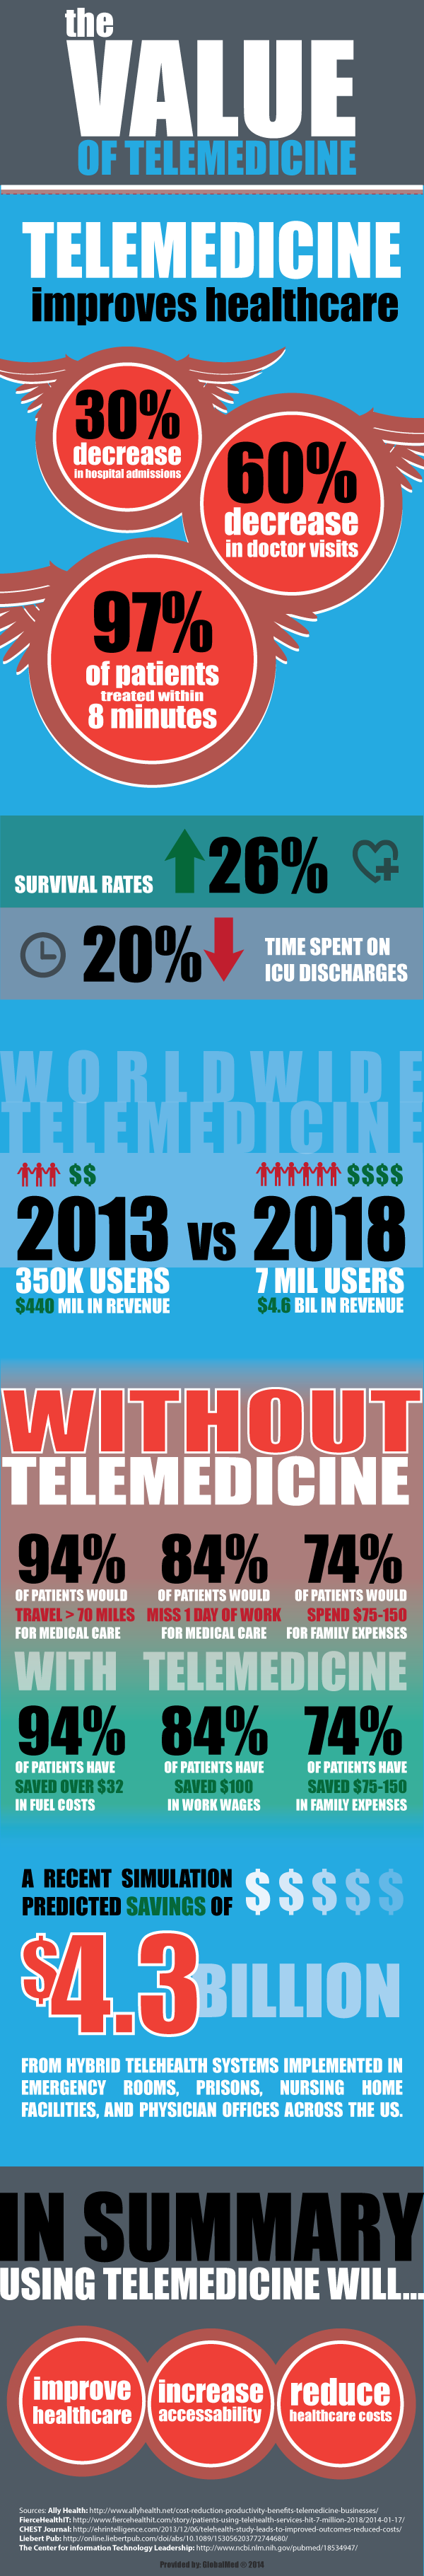 The value of telemedicine